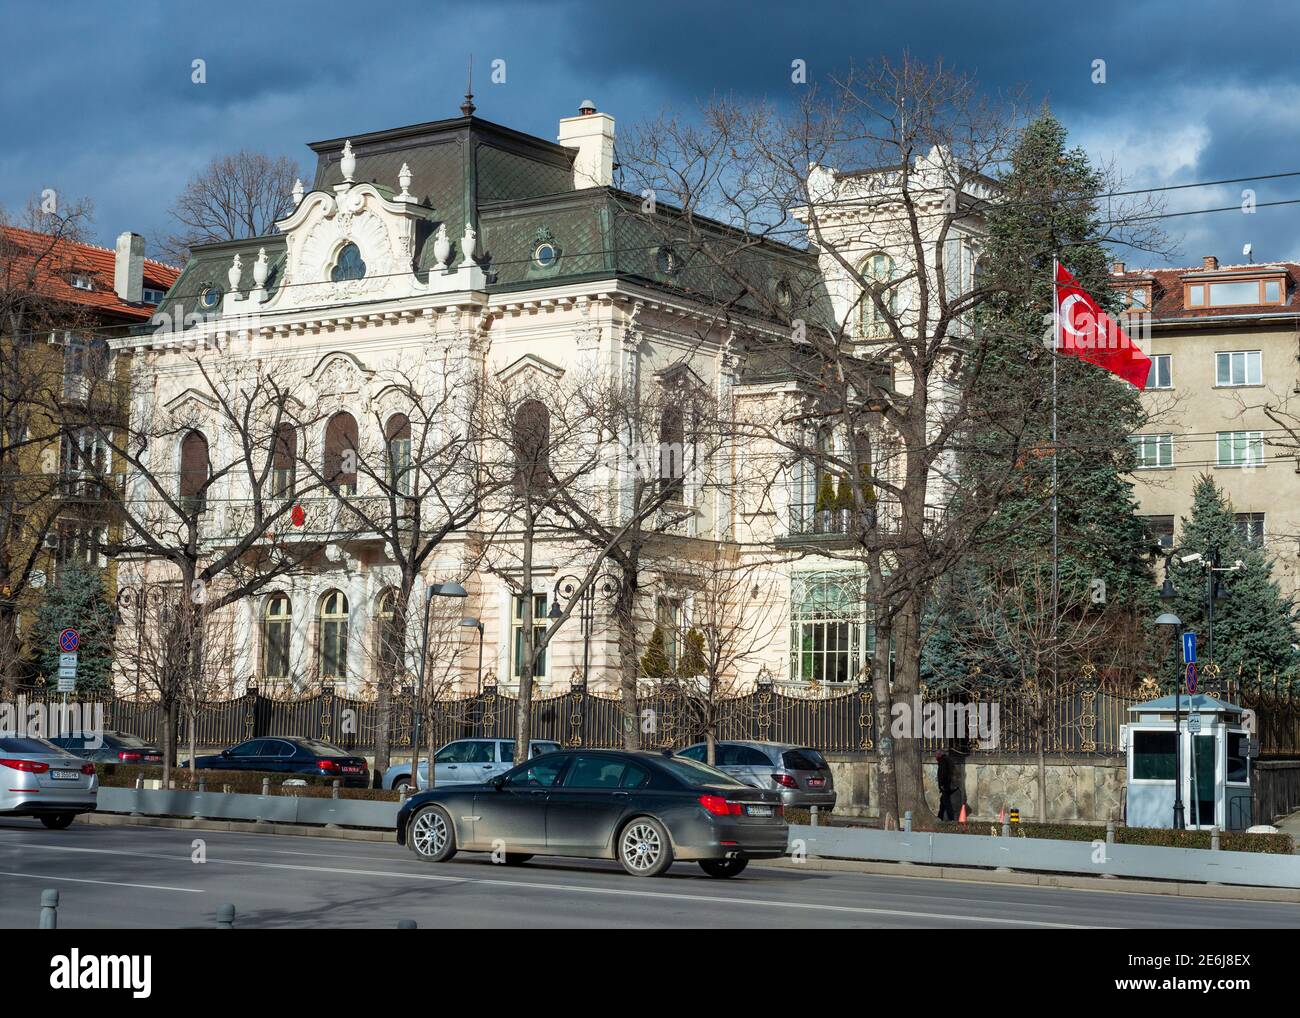 The Turkish Ambassador's residence in Sarmadzhiev House located on Tsar Osvoboditel Boulevard in downtown Sofia Bulgaria Eastern Europe EU Stock Photo